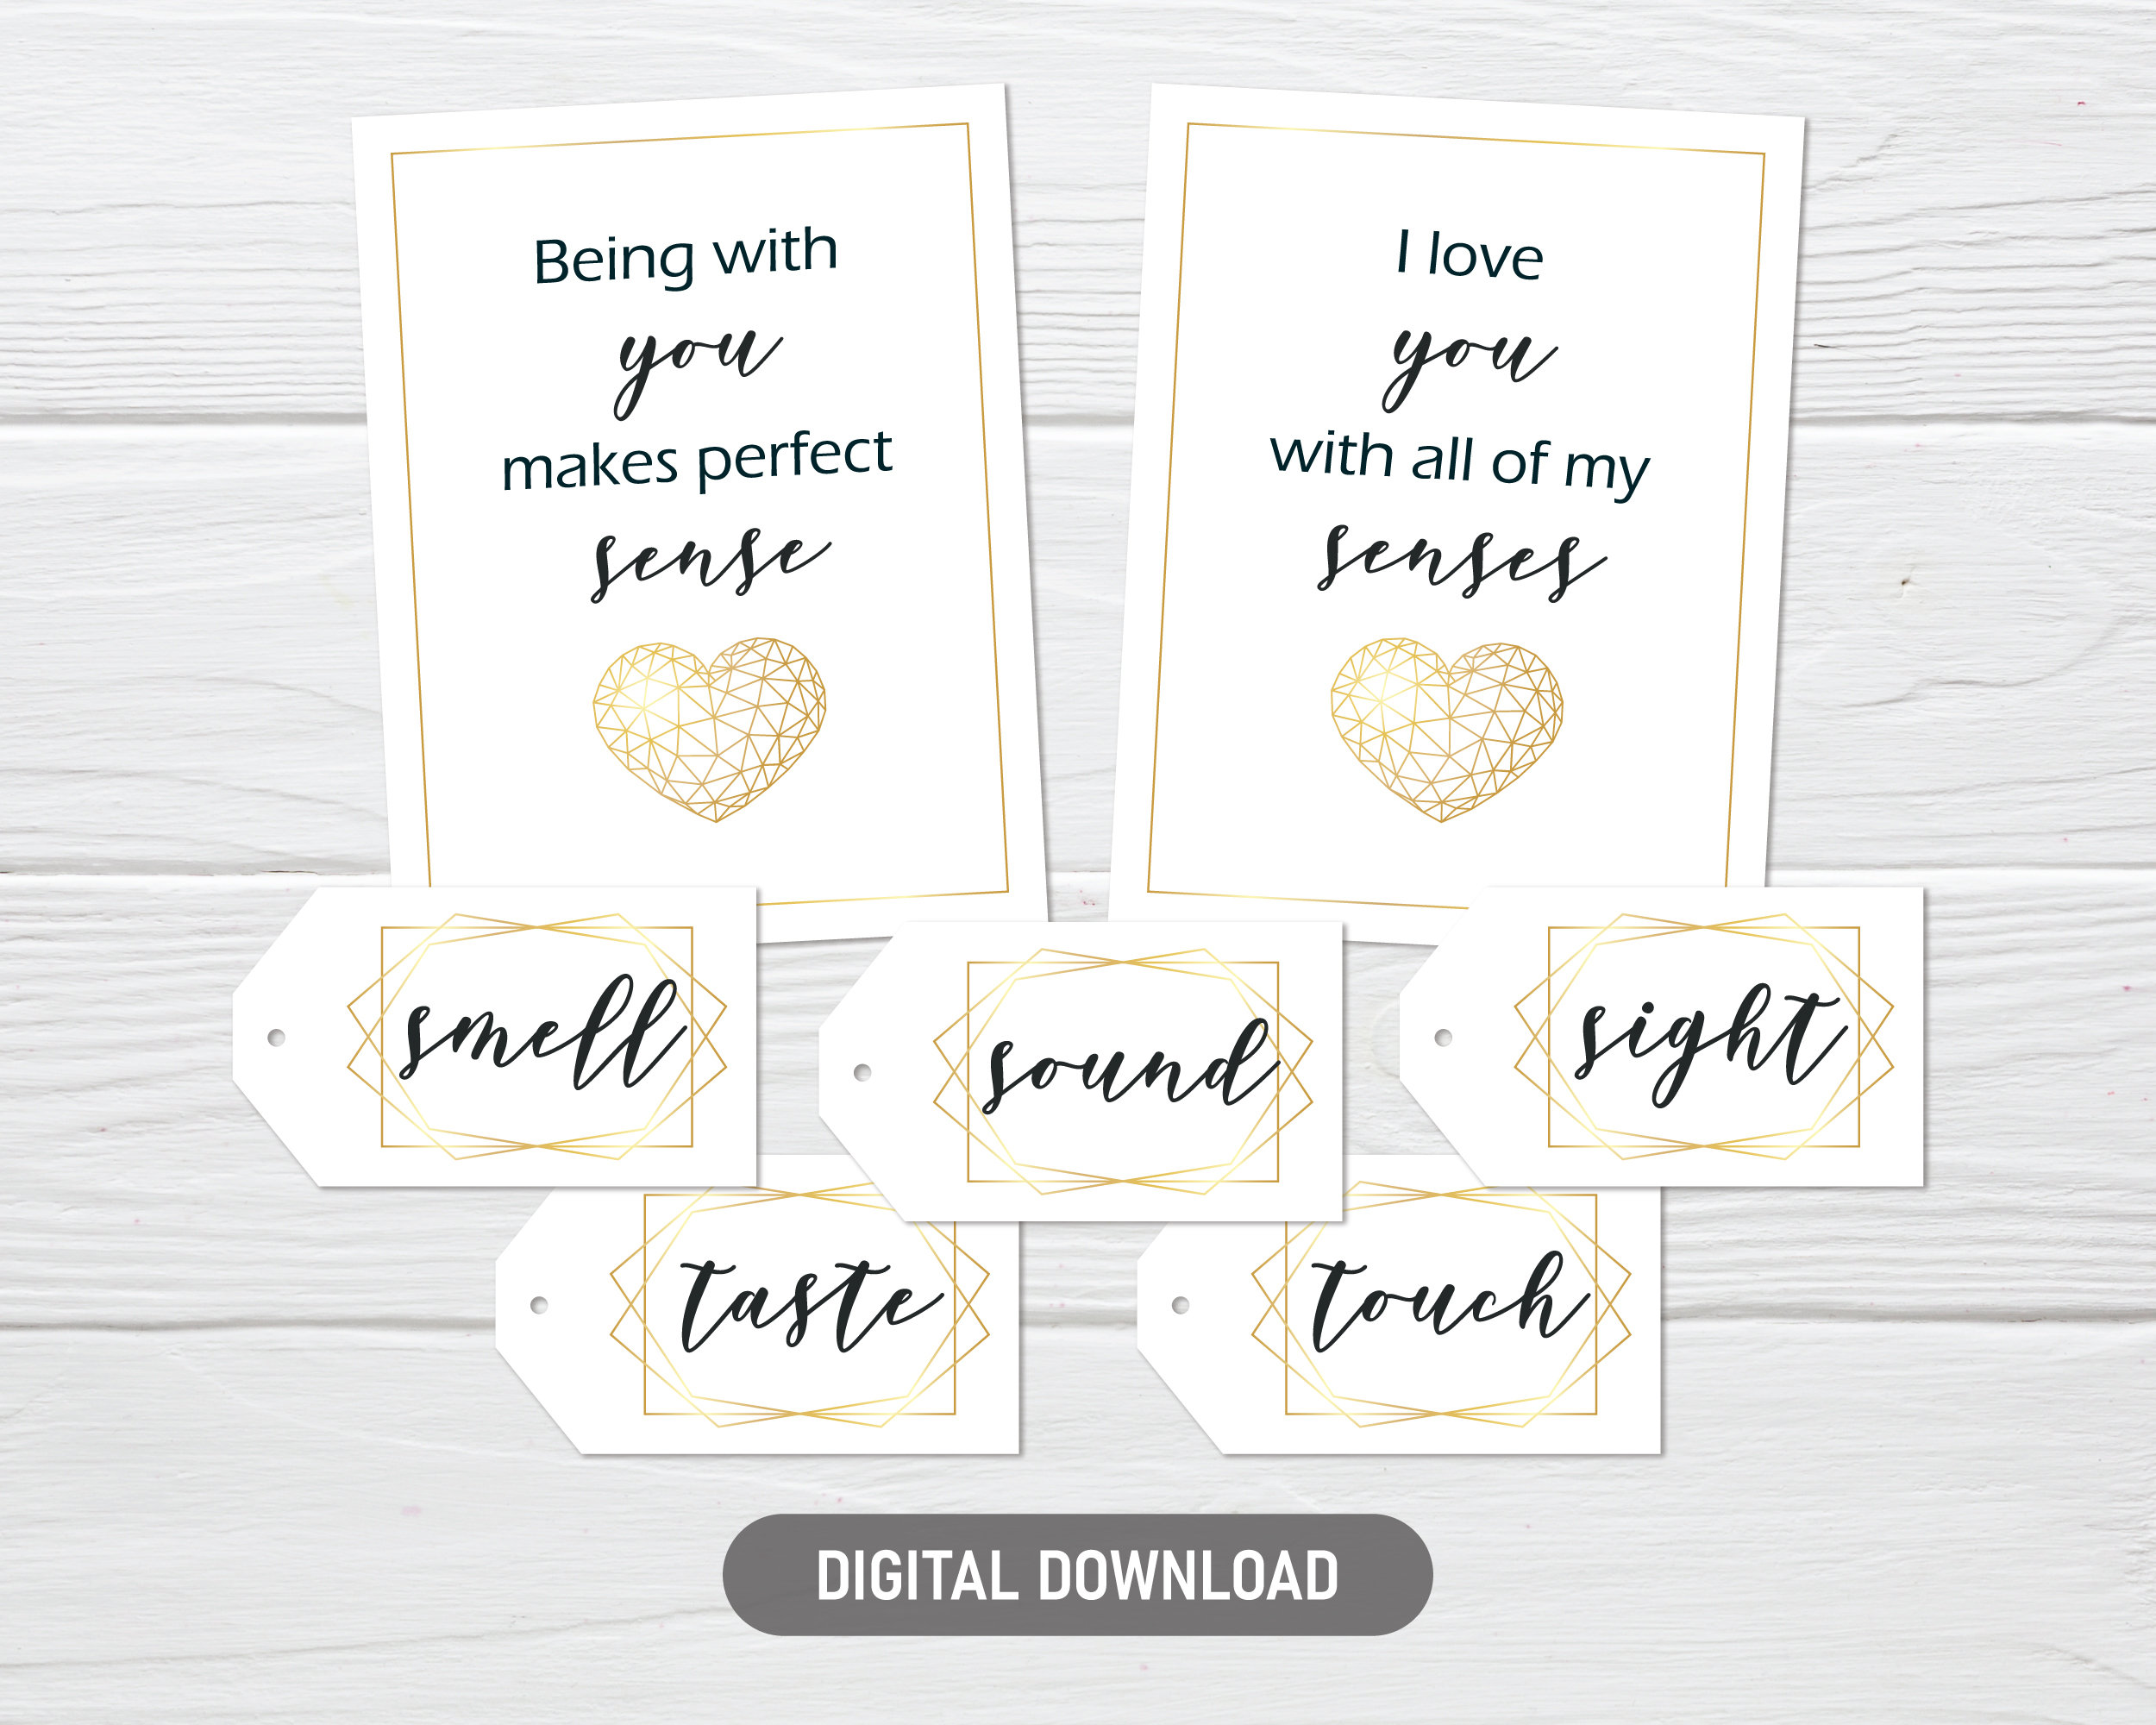 Five Senses Gift Tags & Card. Instant Download Printable. DIY Gift for  Friend, Boyfriend, Girlfriend. Valentines Birthday Christmas 5 Senses 